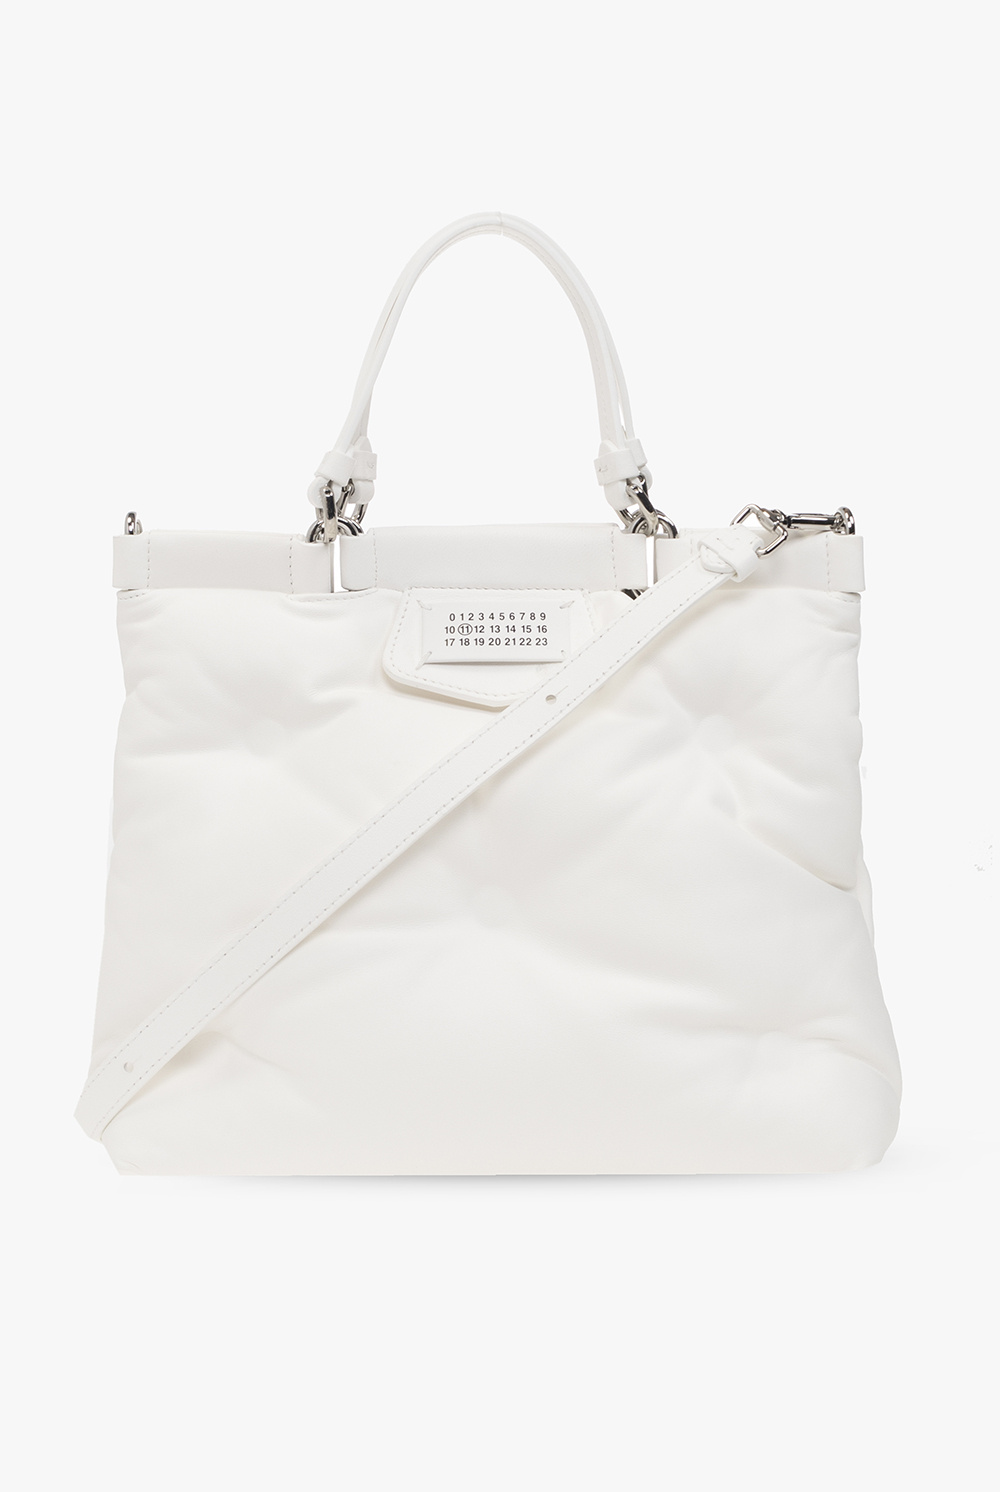 Maison Margiela ‘Glam Slam Small’ shoulder bag